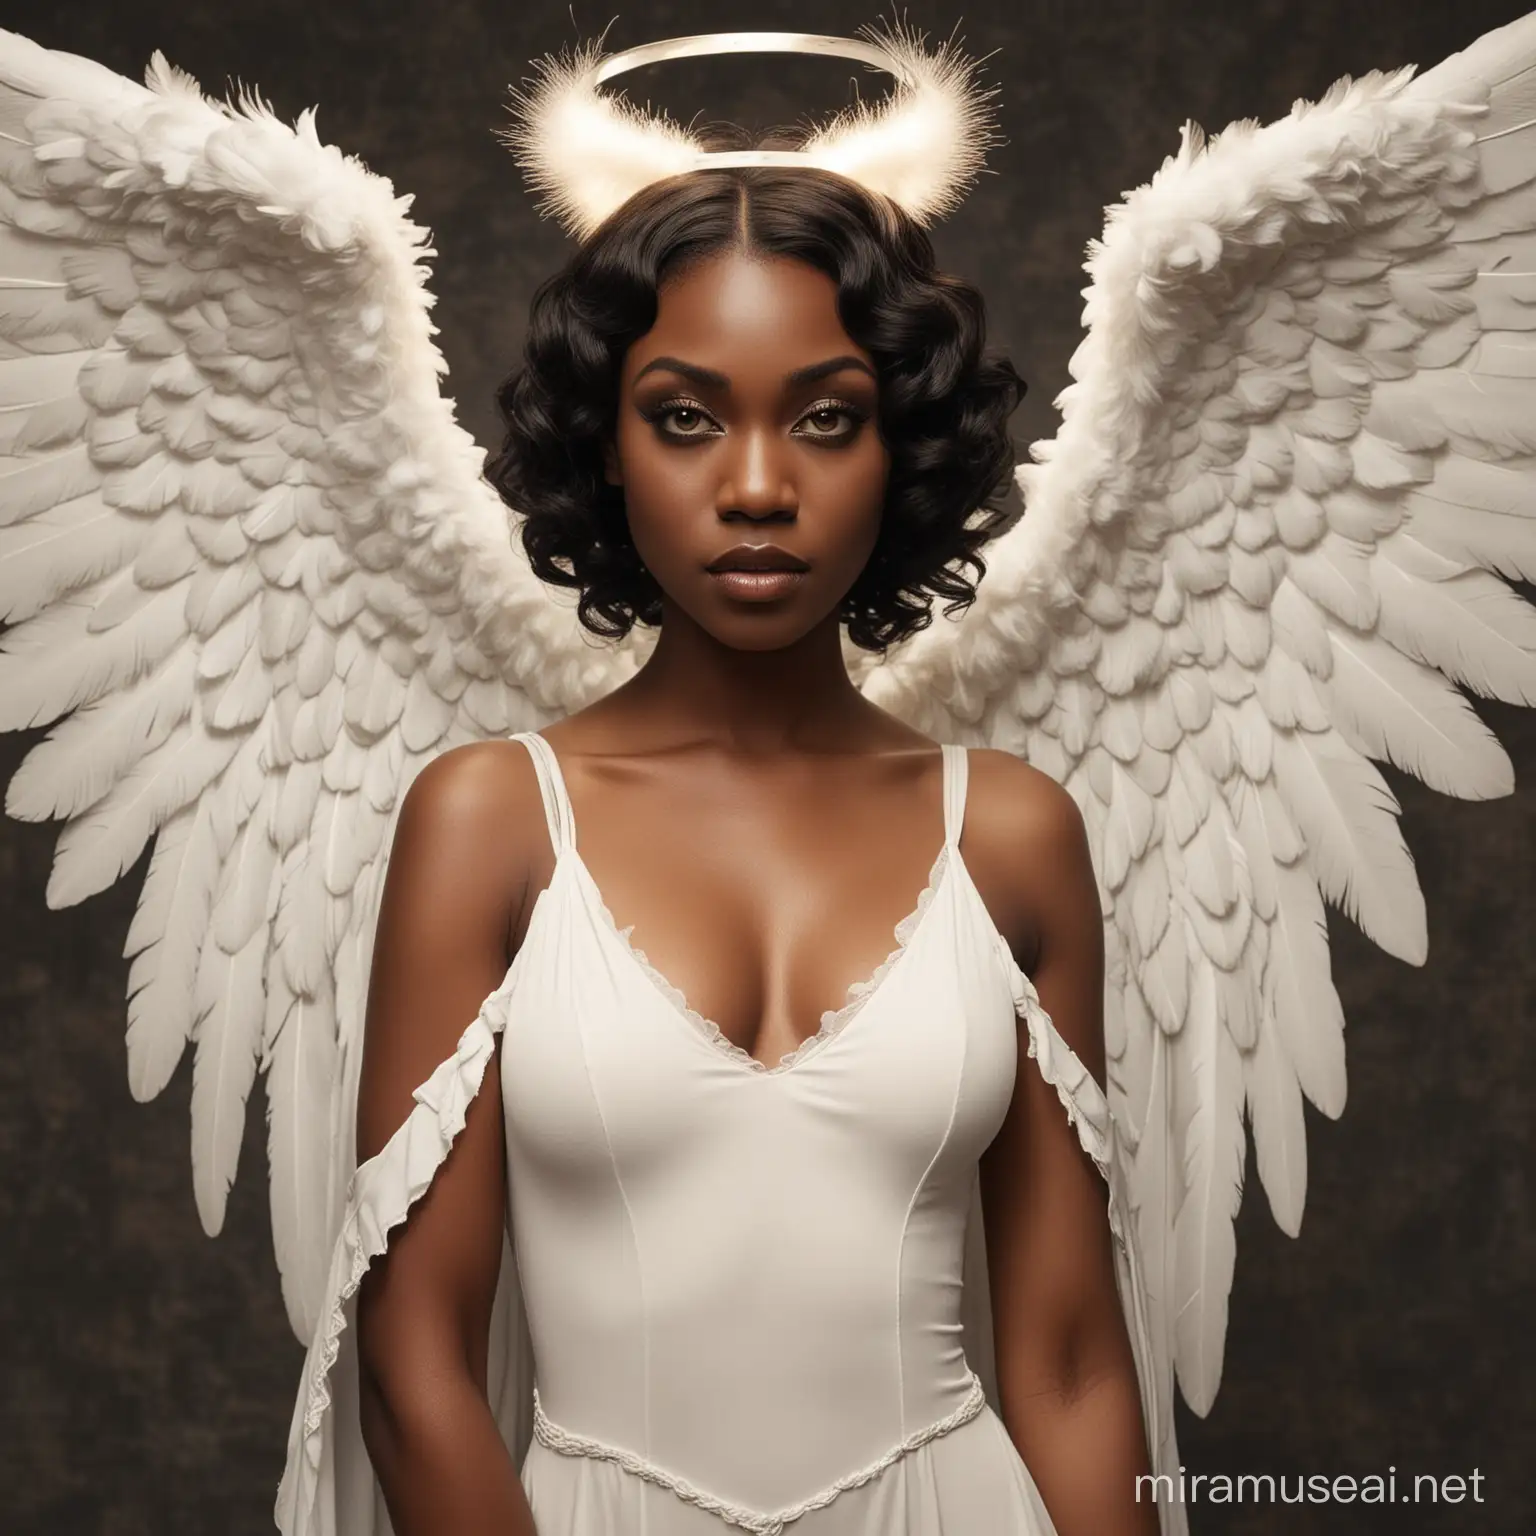 a beautiful black woman dressed as an angel, a beautiful white woman dressed as a demon, 1920s aesthetic